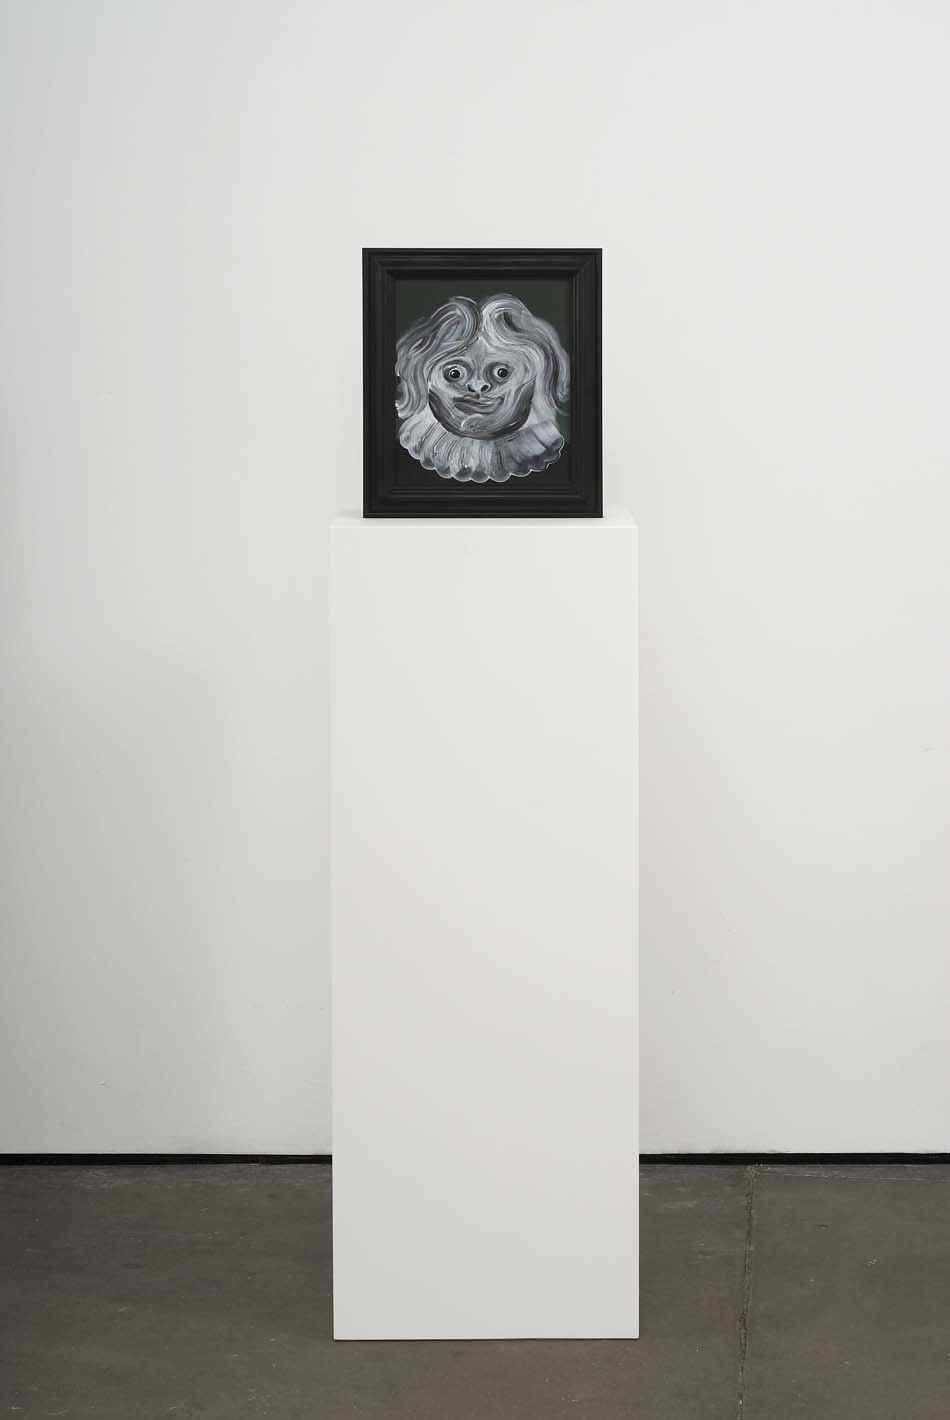      Boy Wonder   2009   Double-sided acrylic on board in artists frame mounted on pedestal   147.3 x 40 x 28cm  